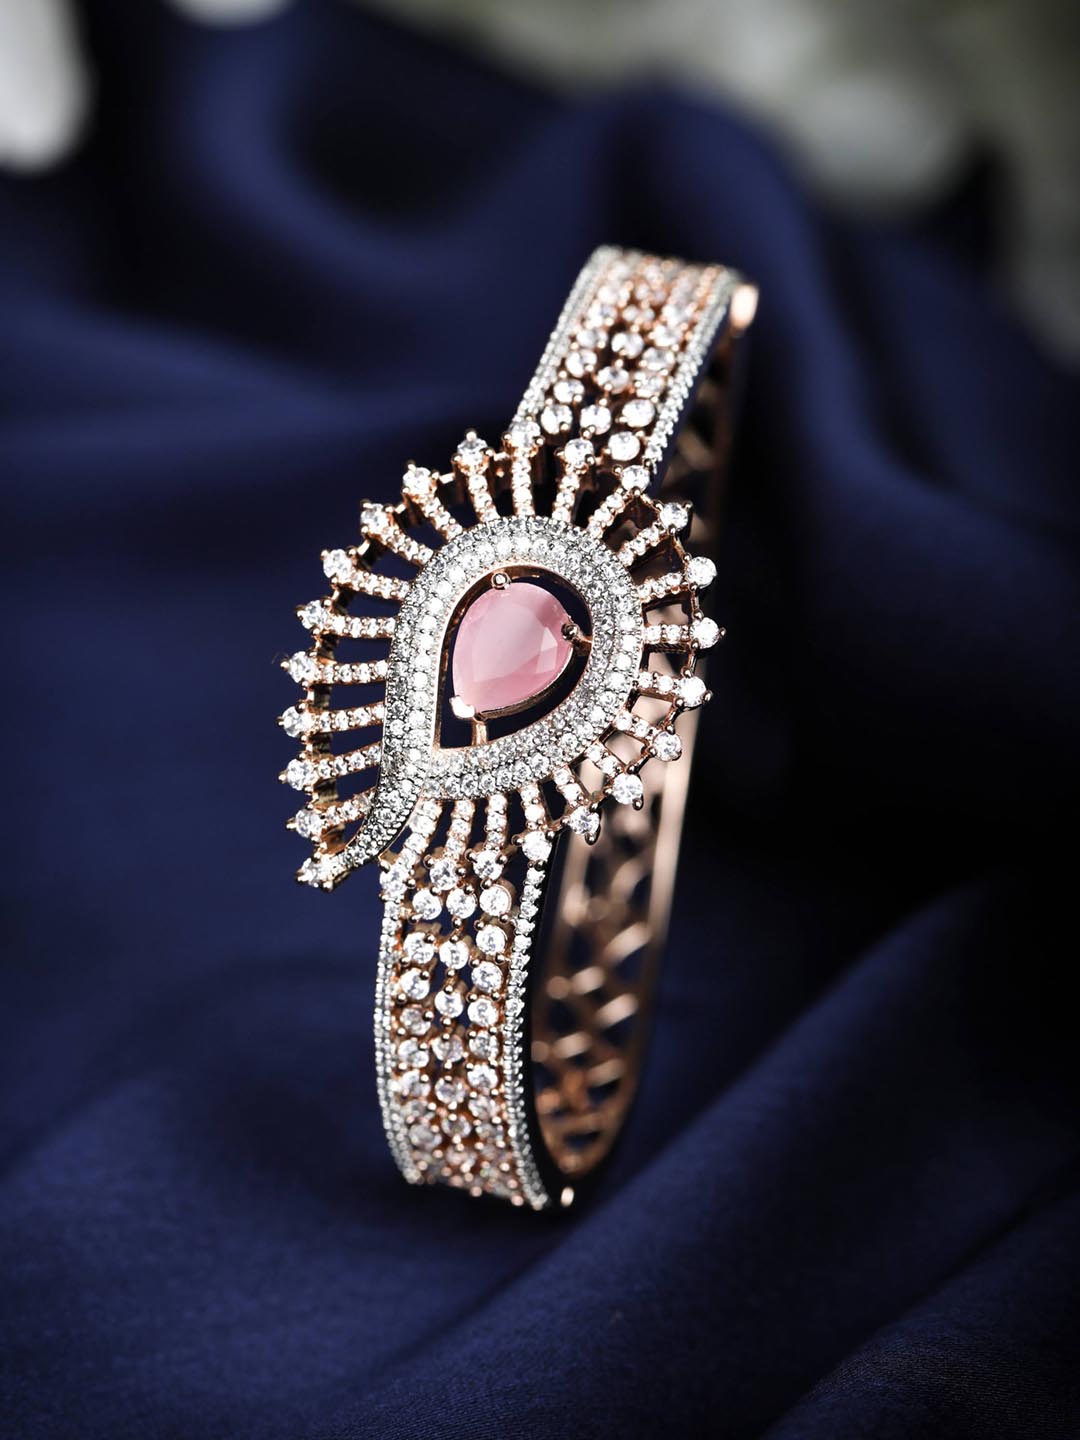 Blush Bond-Pink American Diamond Rose Gold Plated Floral Bangle Style Bracelet